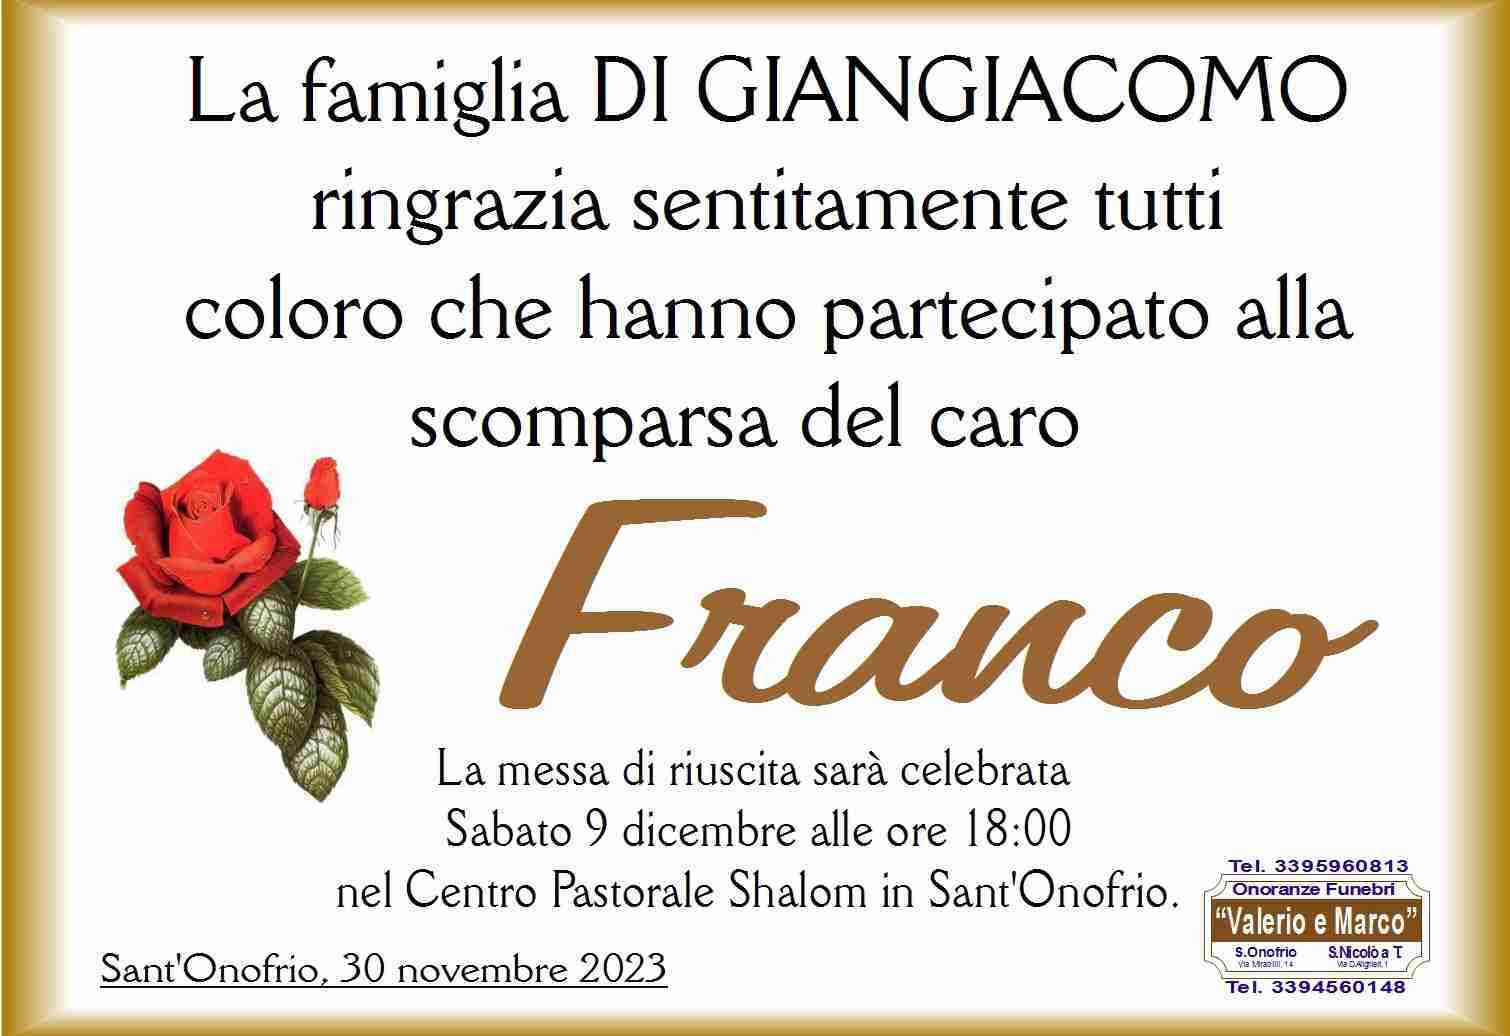 Franco Di Giangiacomo